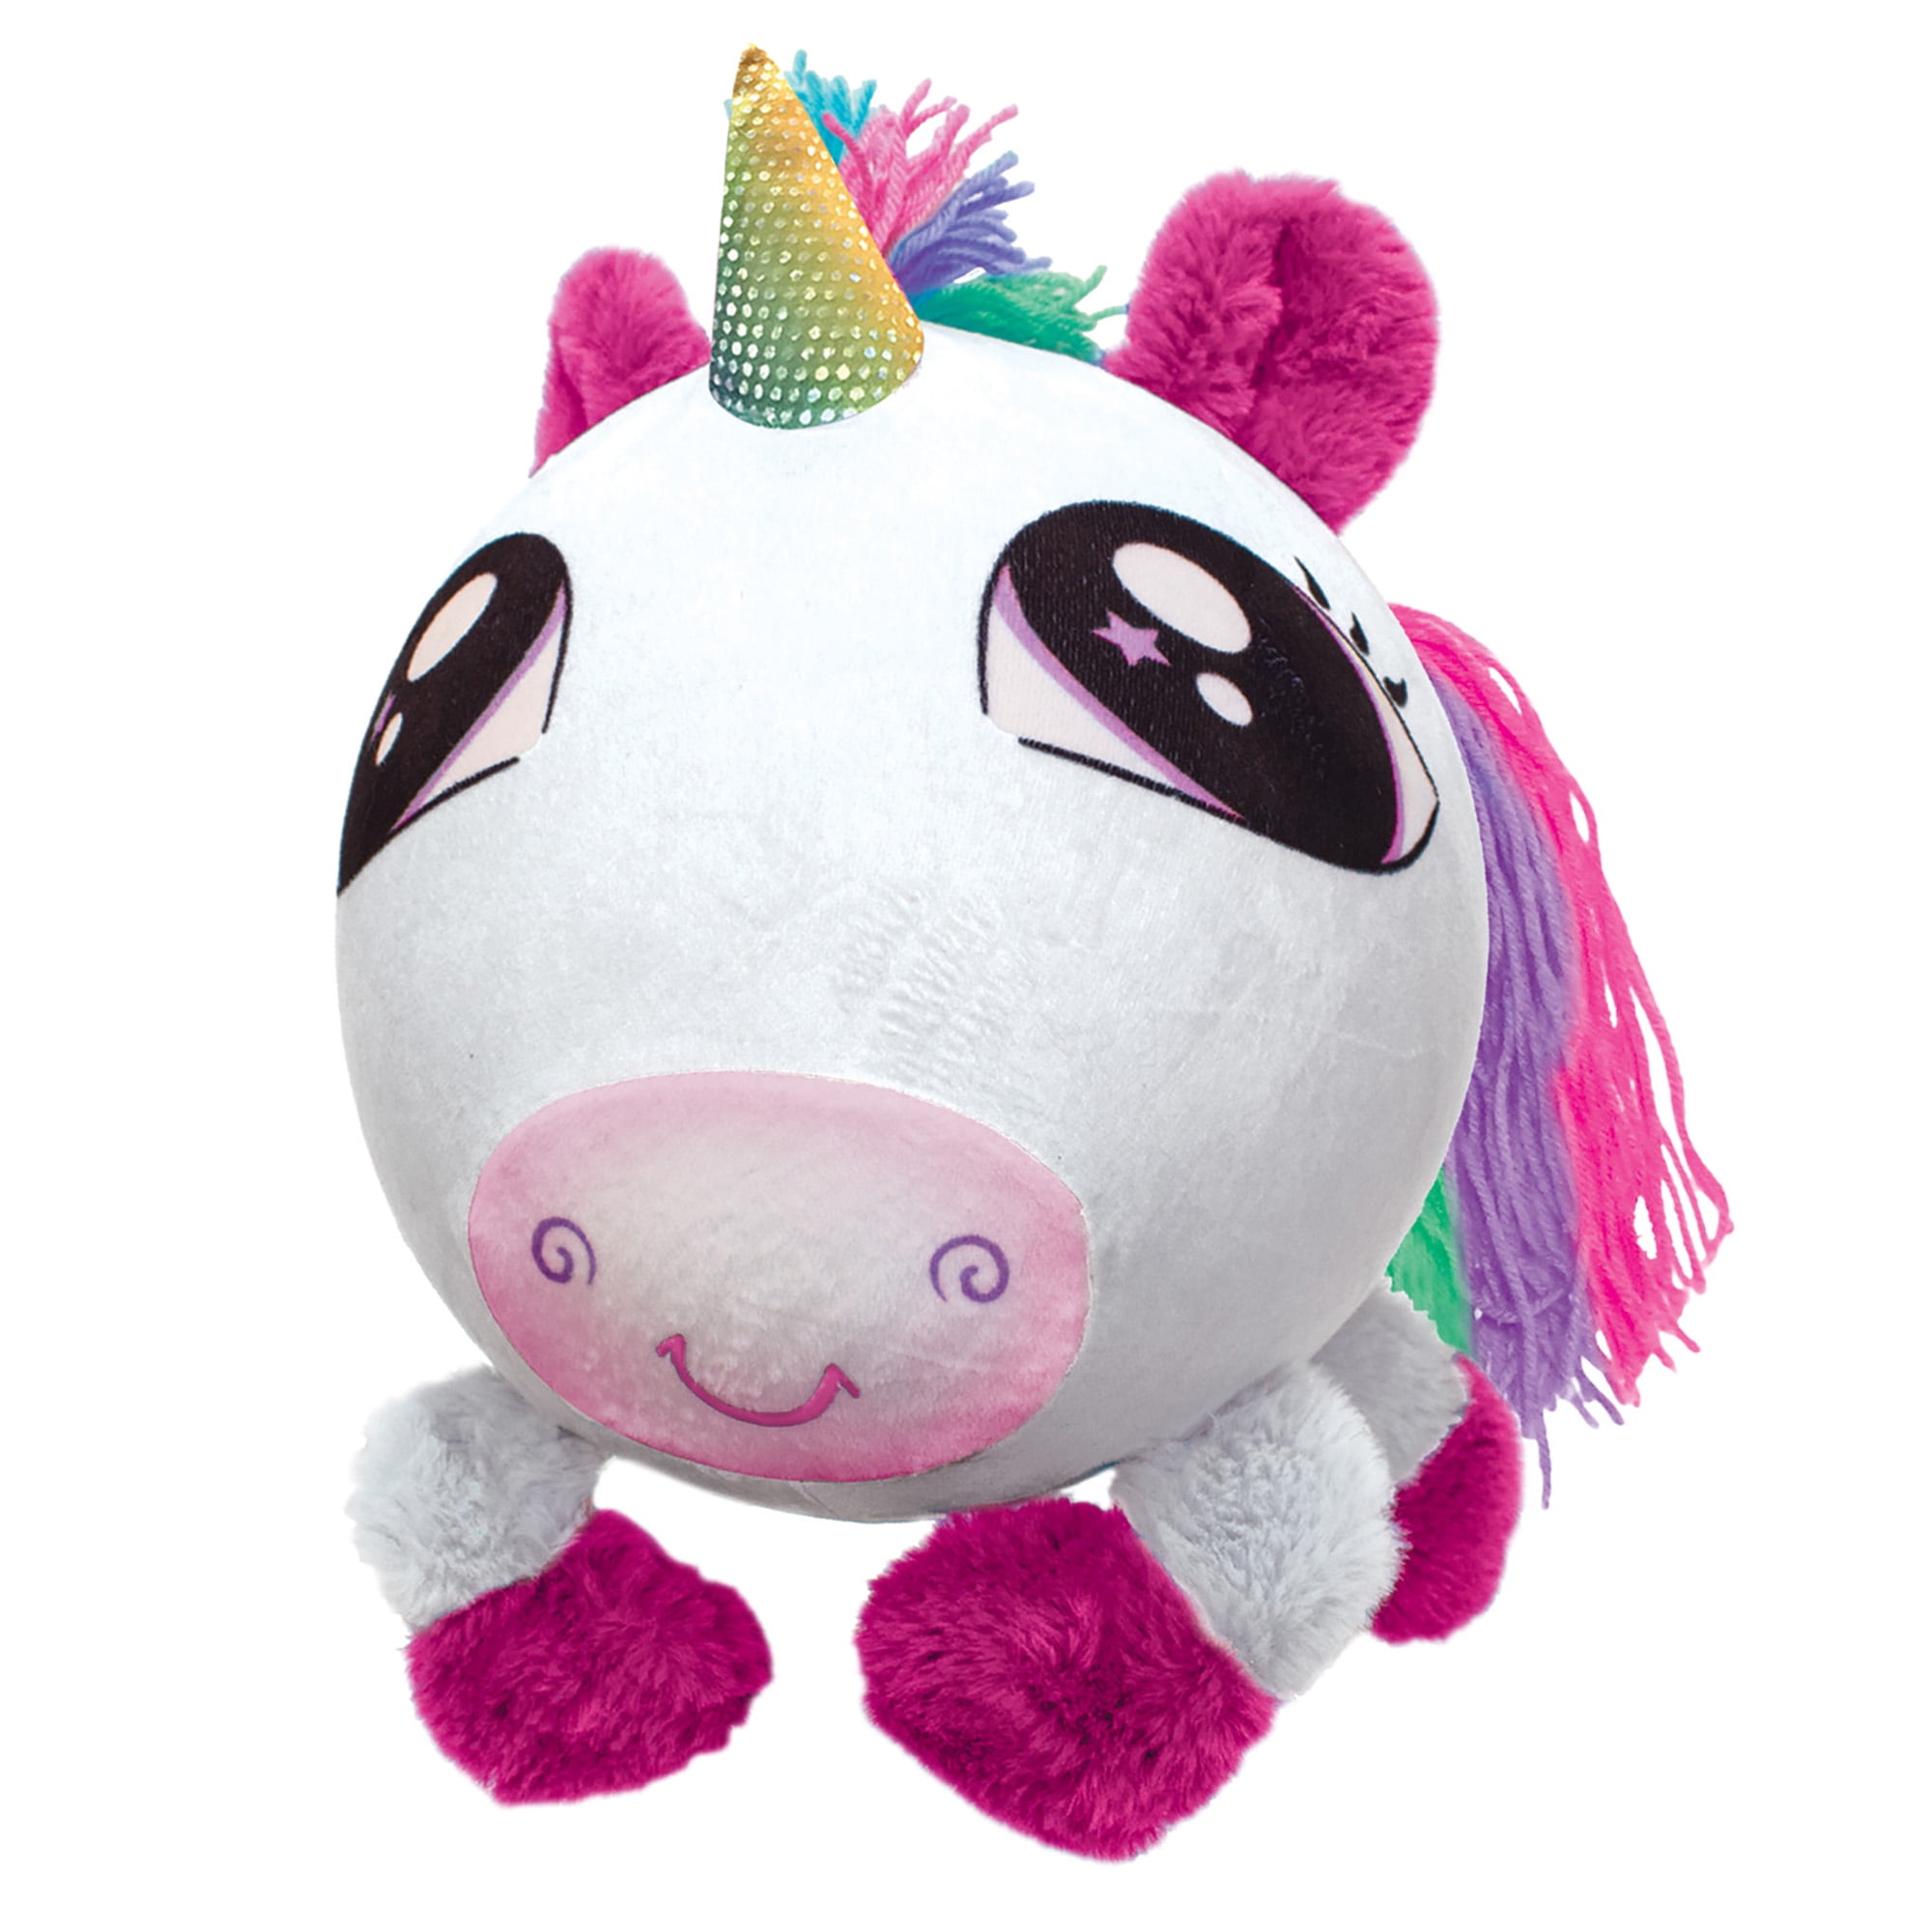 fuzzy wubble ball unicorn